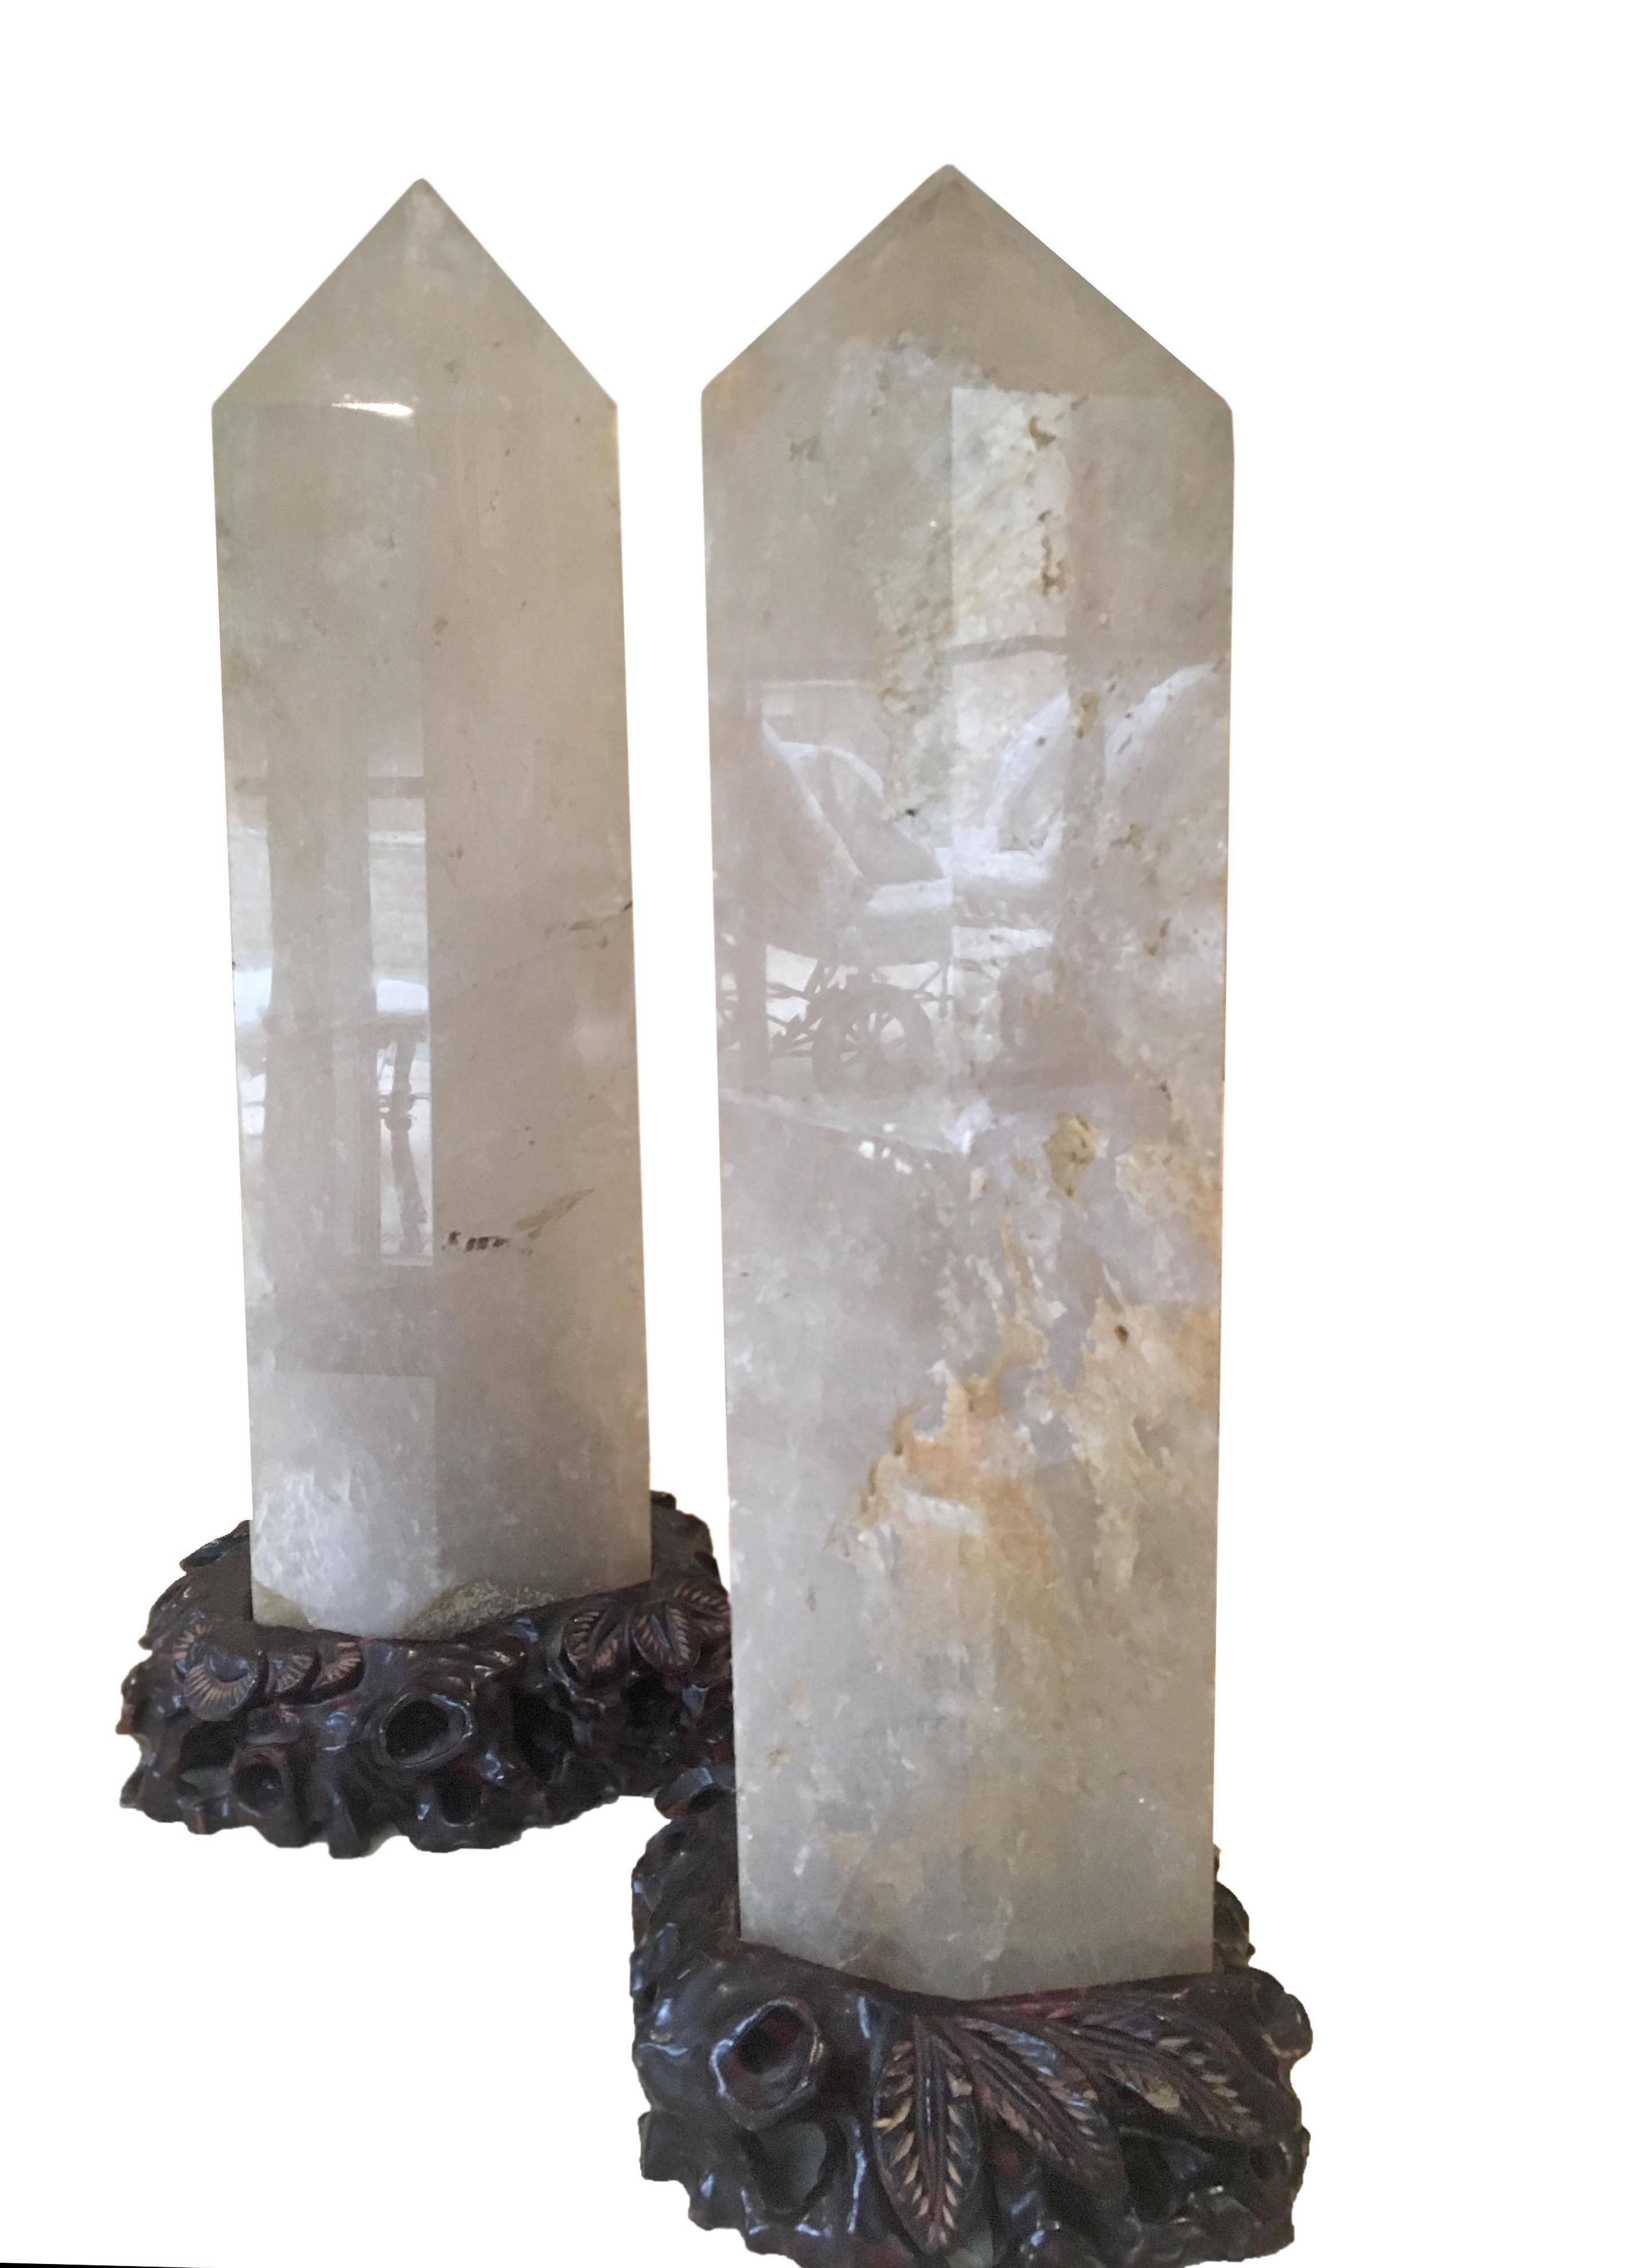 The pair of quartz rock crystal Obelisks on custom hand-carved wooden stands.
Dimensions:
6